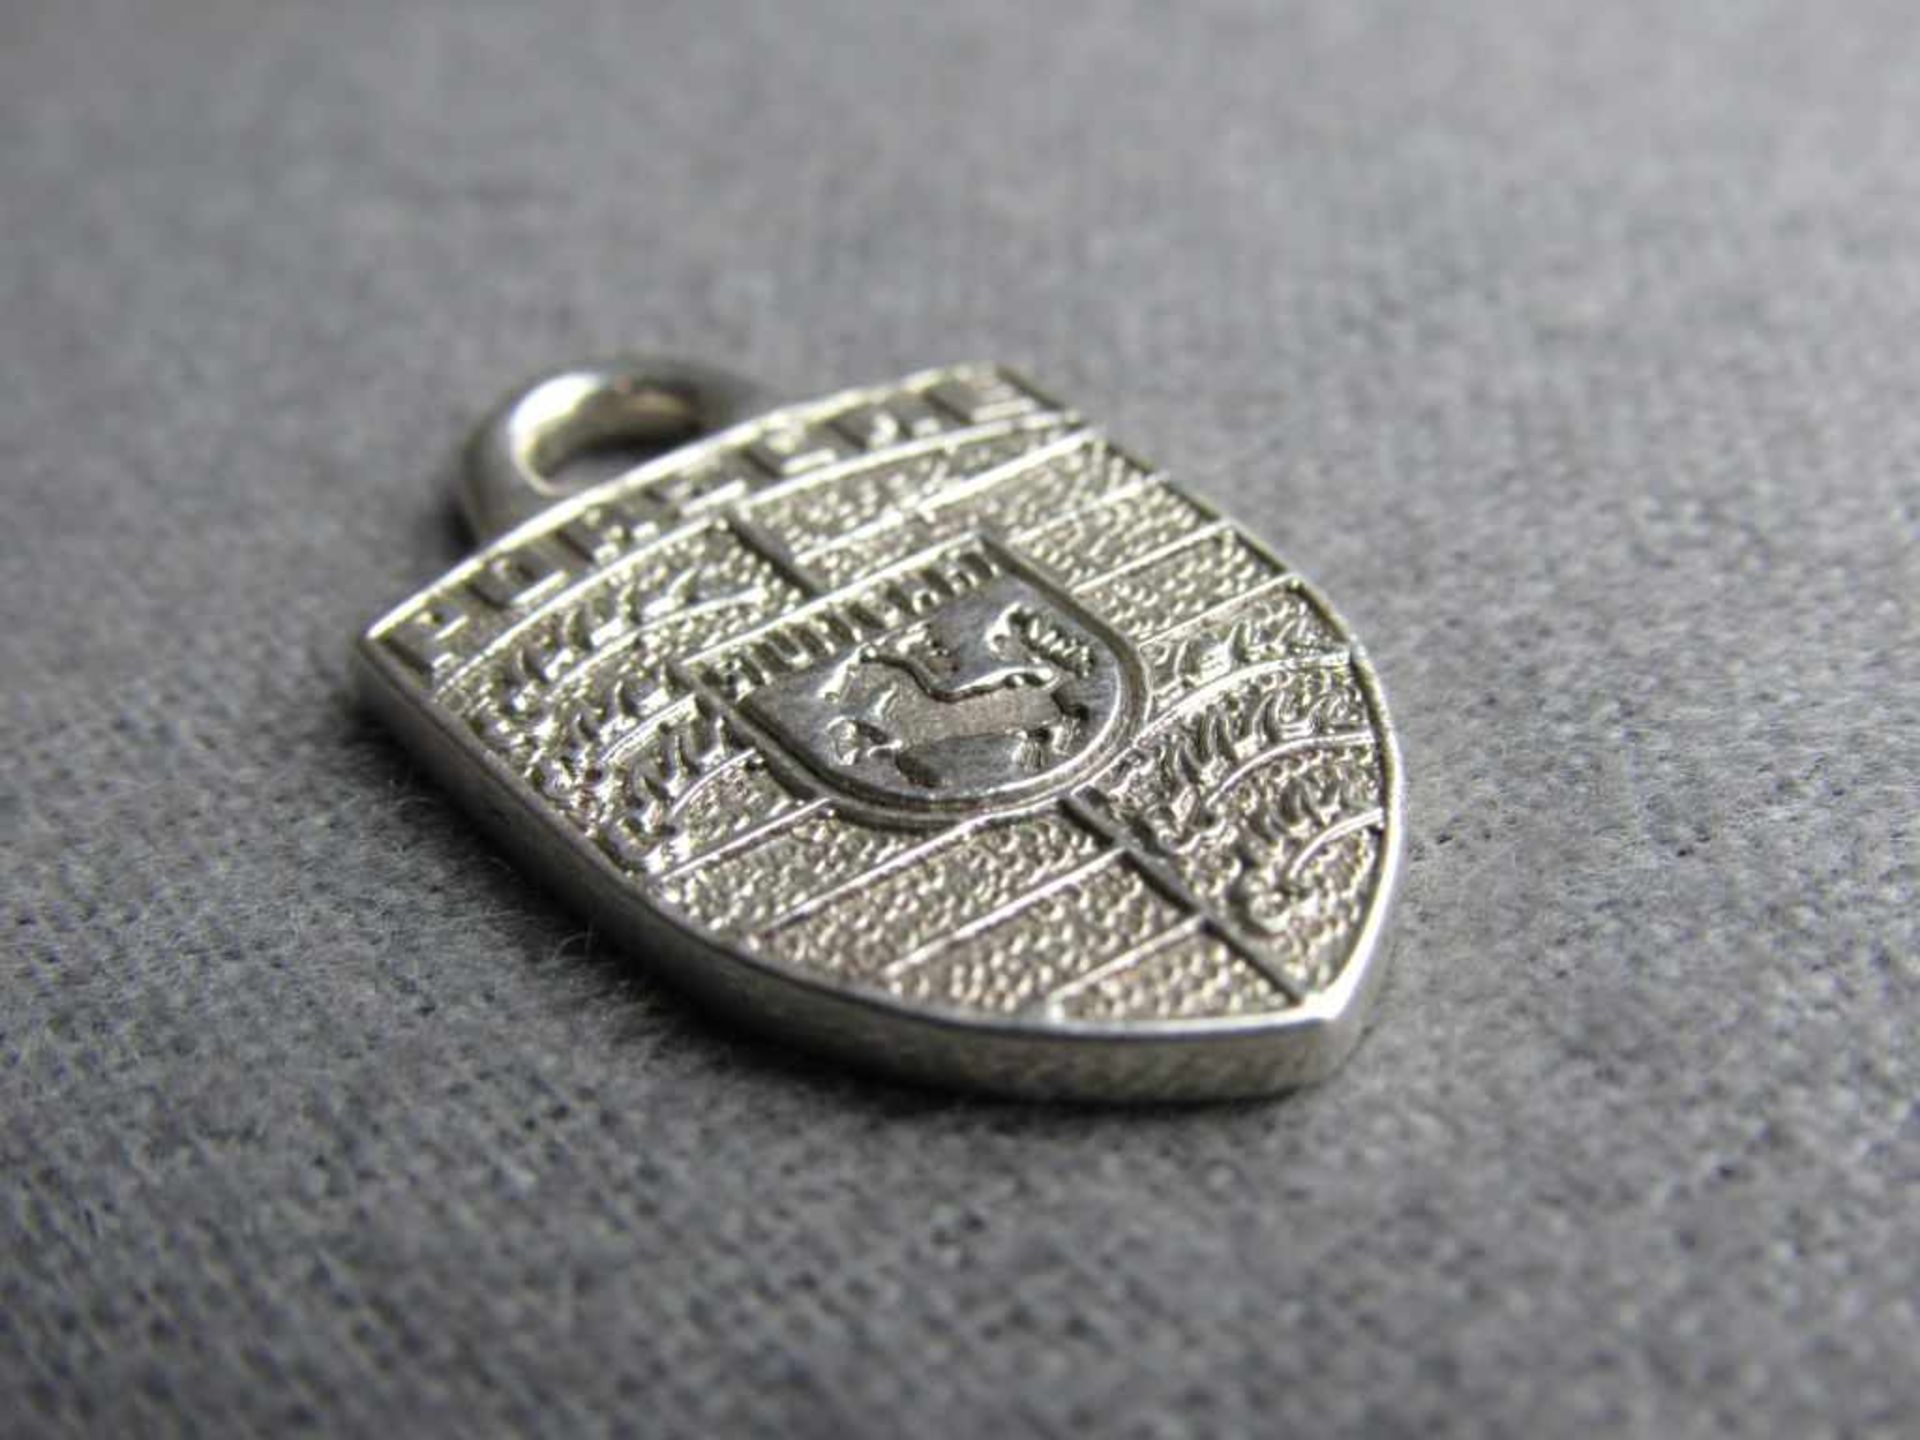 Porsche Emblem Kettenanhänger Schlüsselanhänger original, min 900er Silber geprüft, schöner Zustand, - Bild 3 aus 4